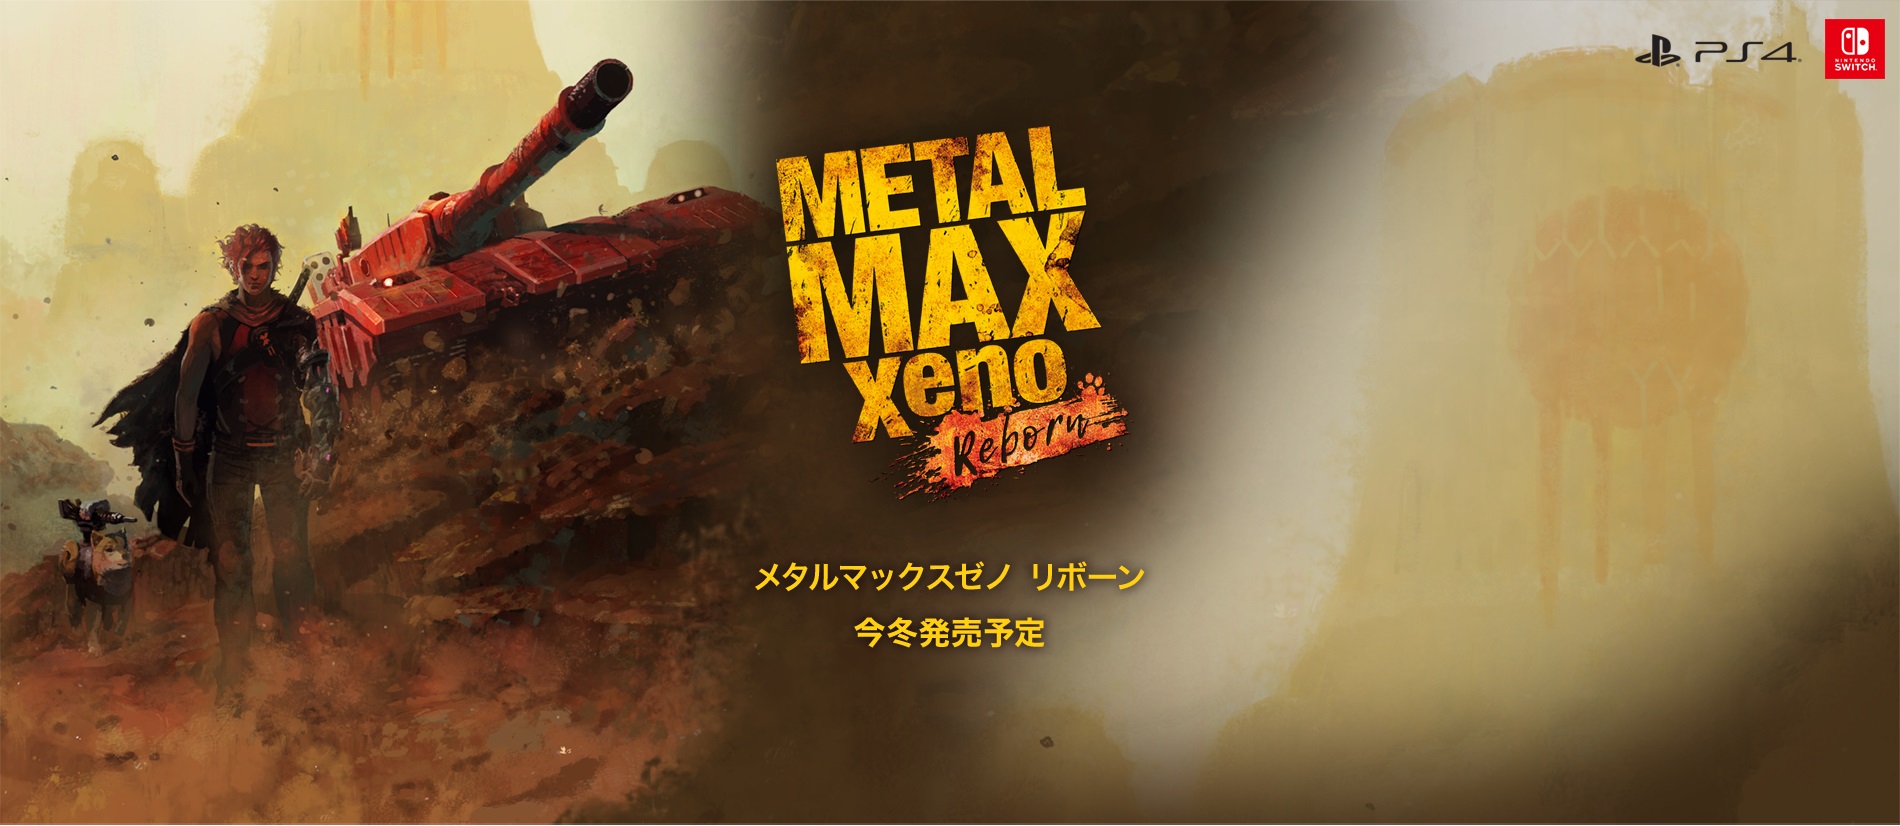 Metal Max Xeno: Reborn, Metal Max Xeno: Reborn 2 announced for Switch - Nintendo ...1900 x 826